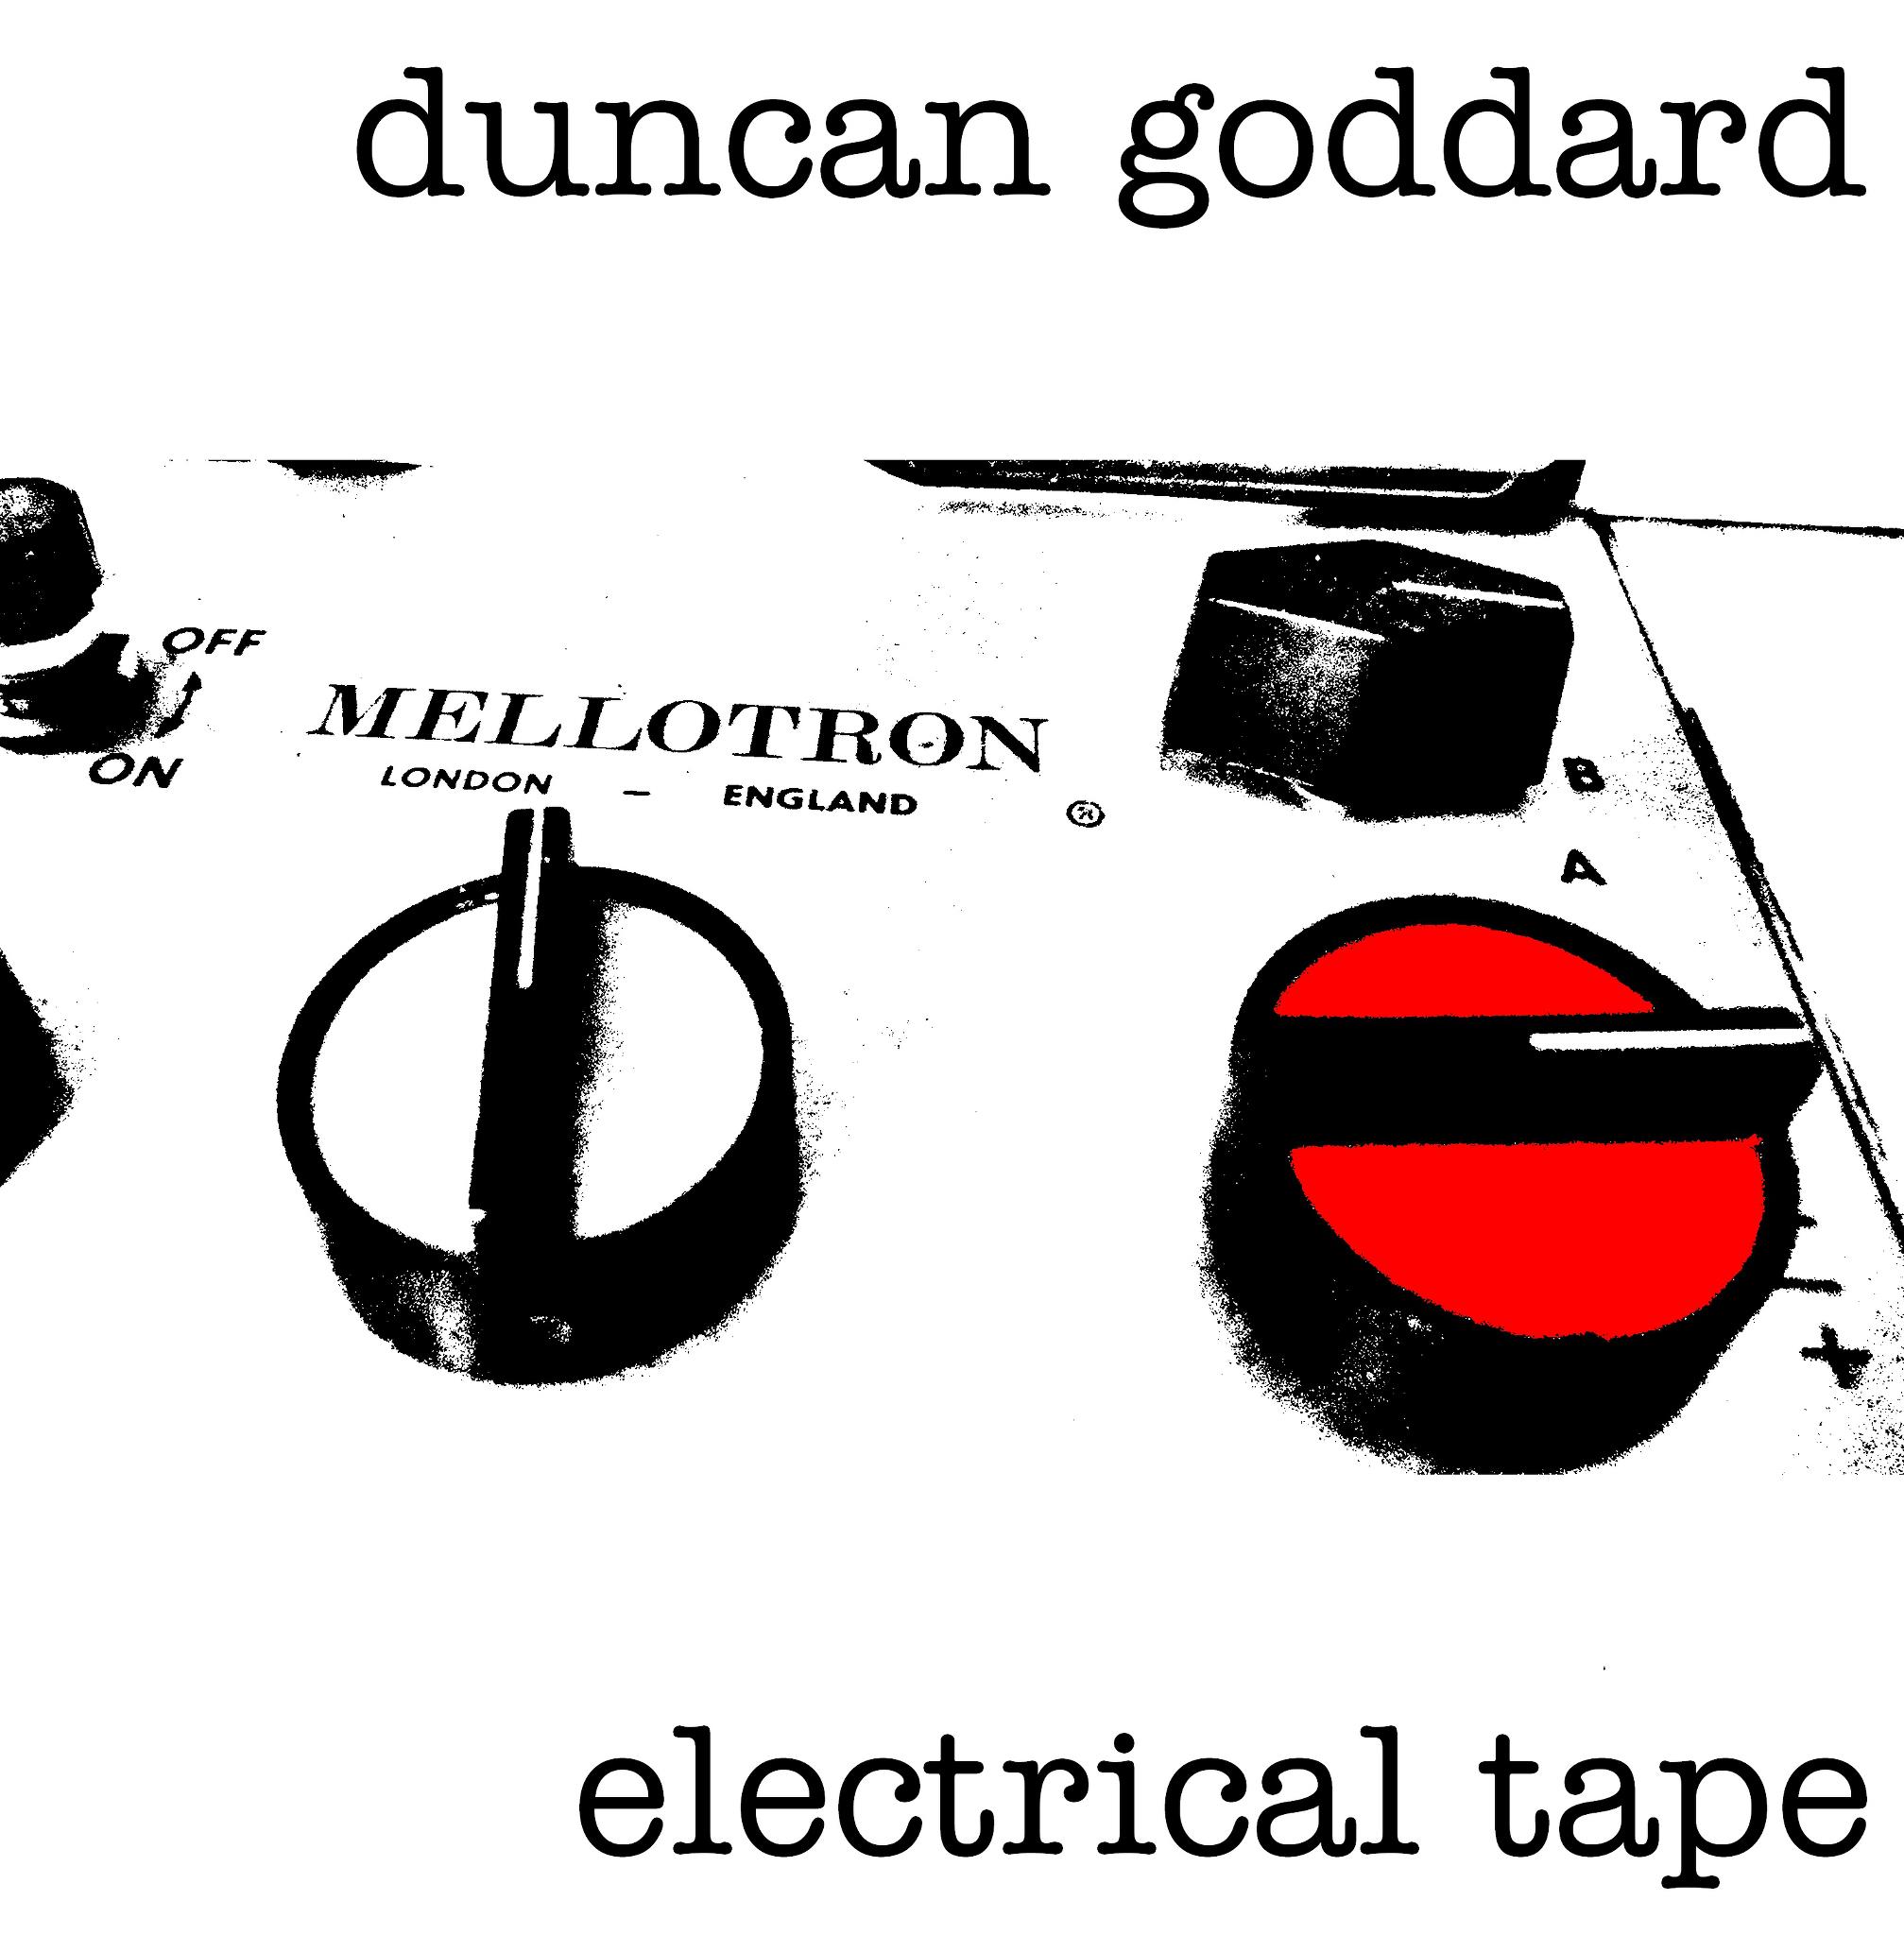 duncan goddard: electrical tape